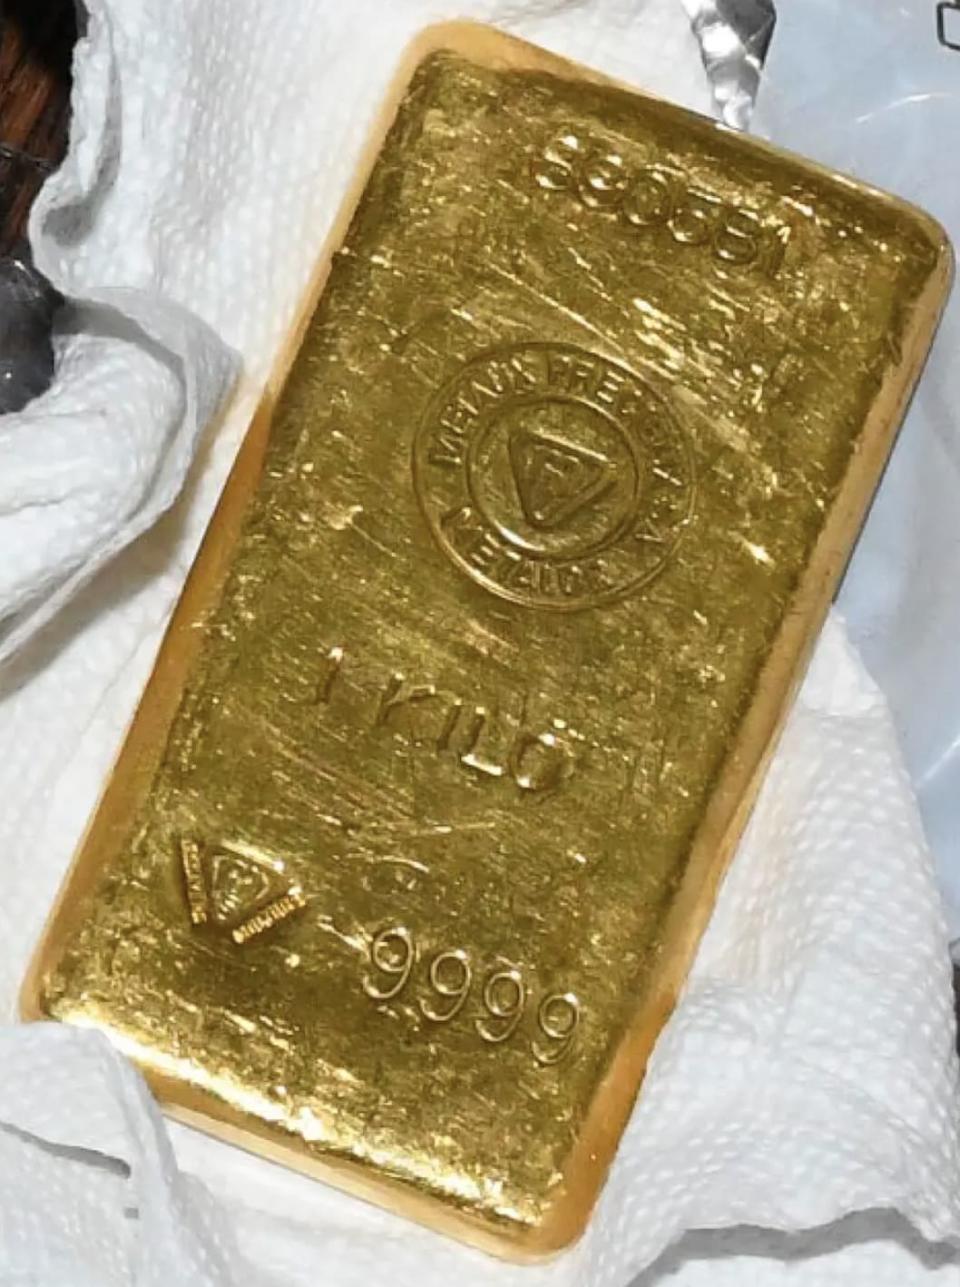 A gold bar on a white sheet